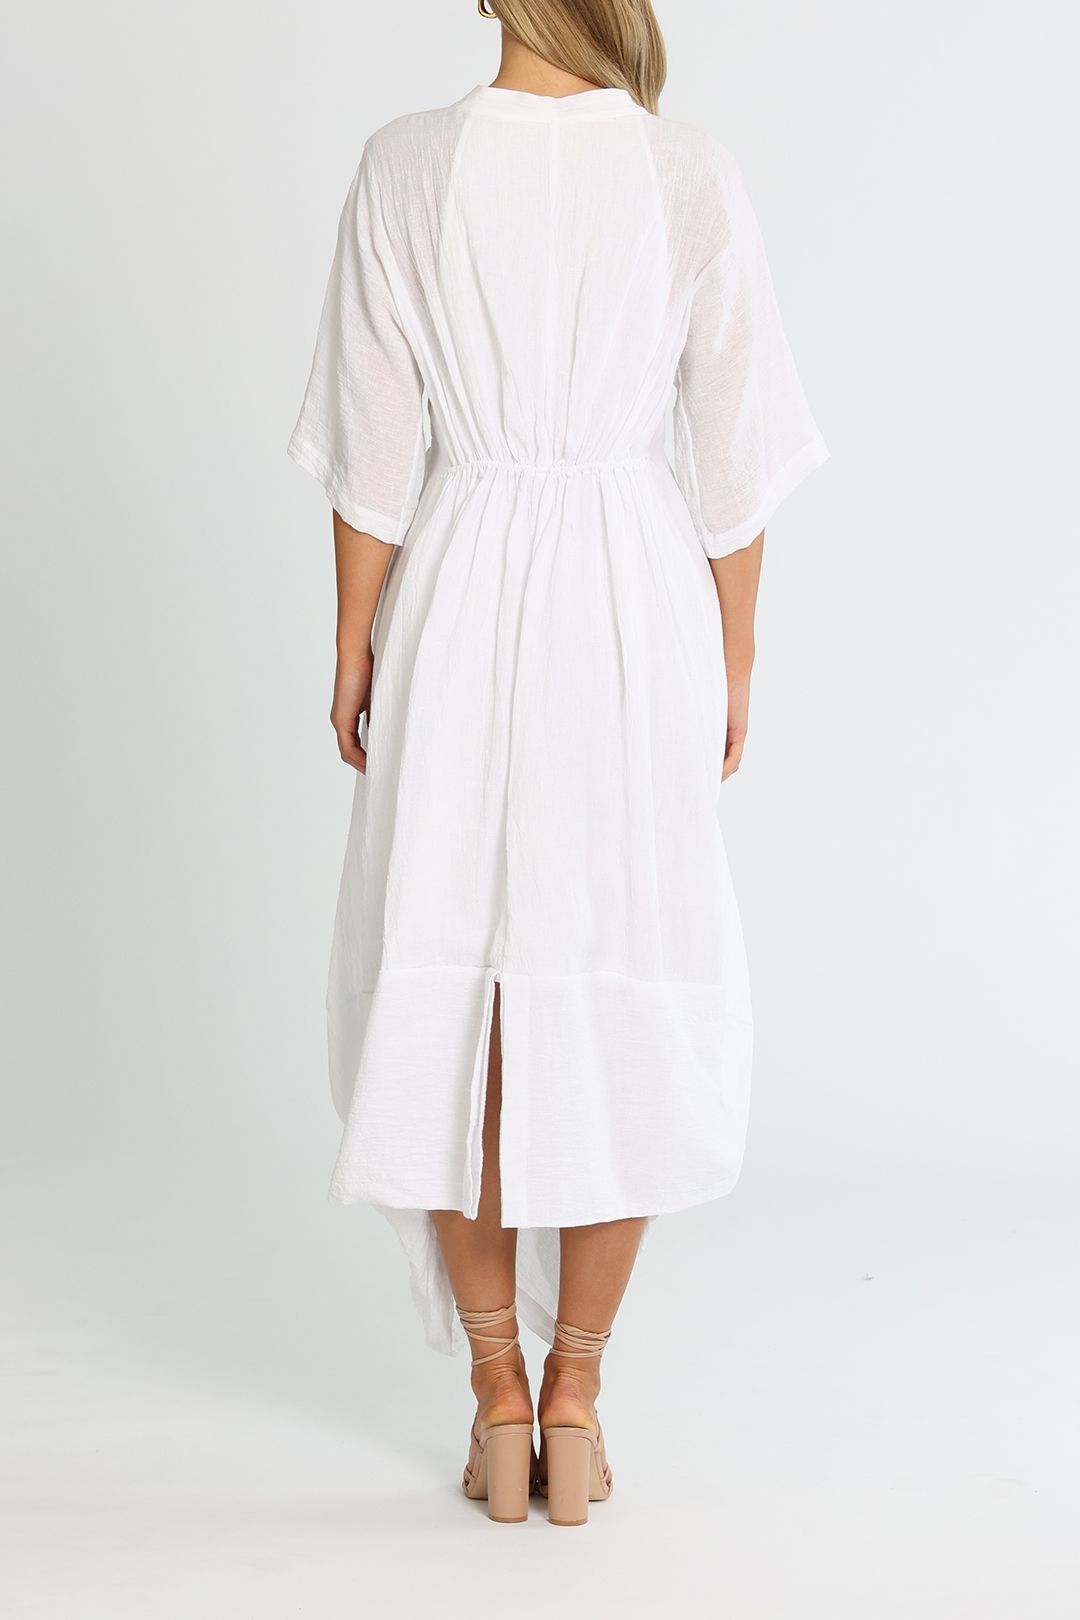 KITX Ocean Angel Dress White Asymmetrical